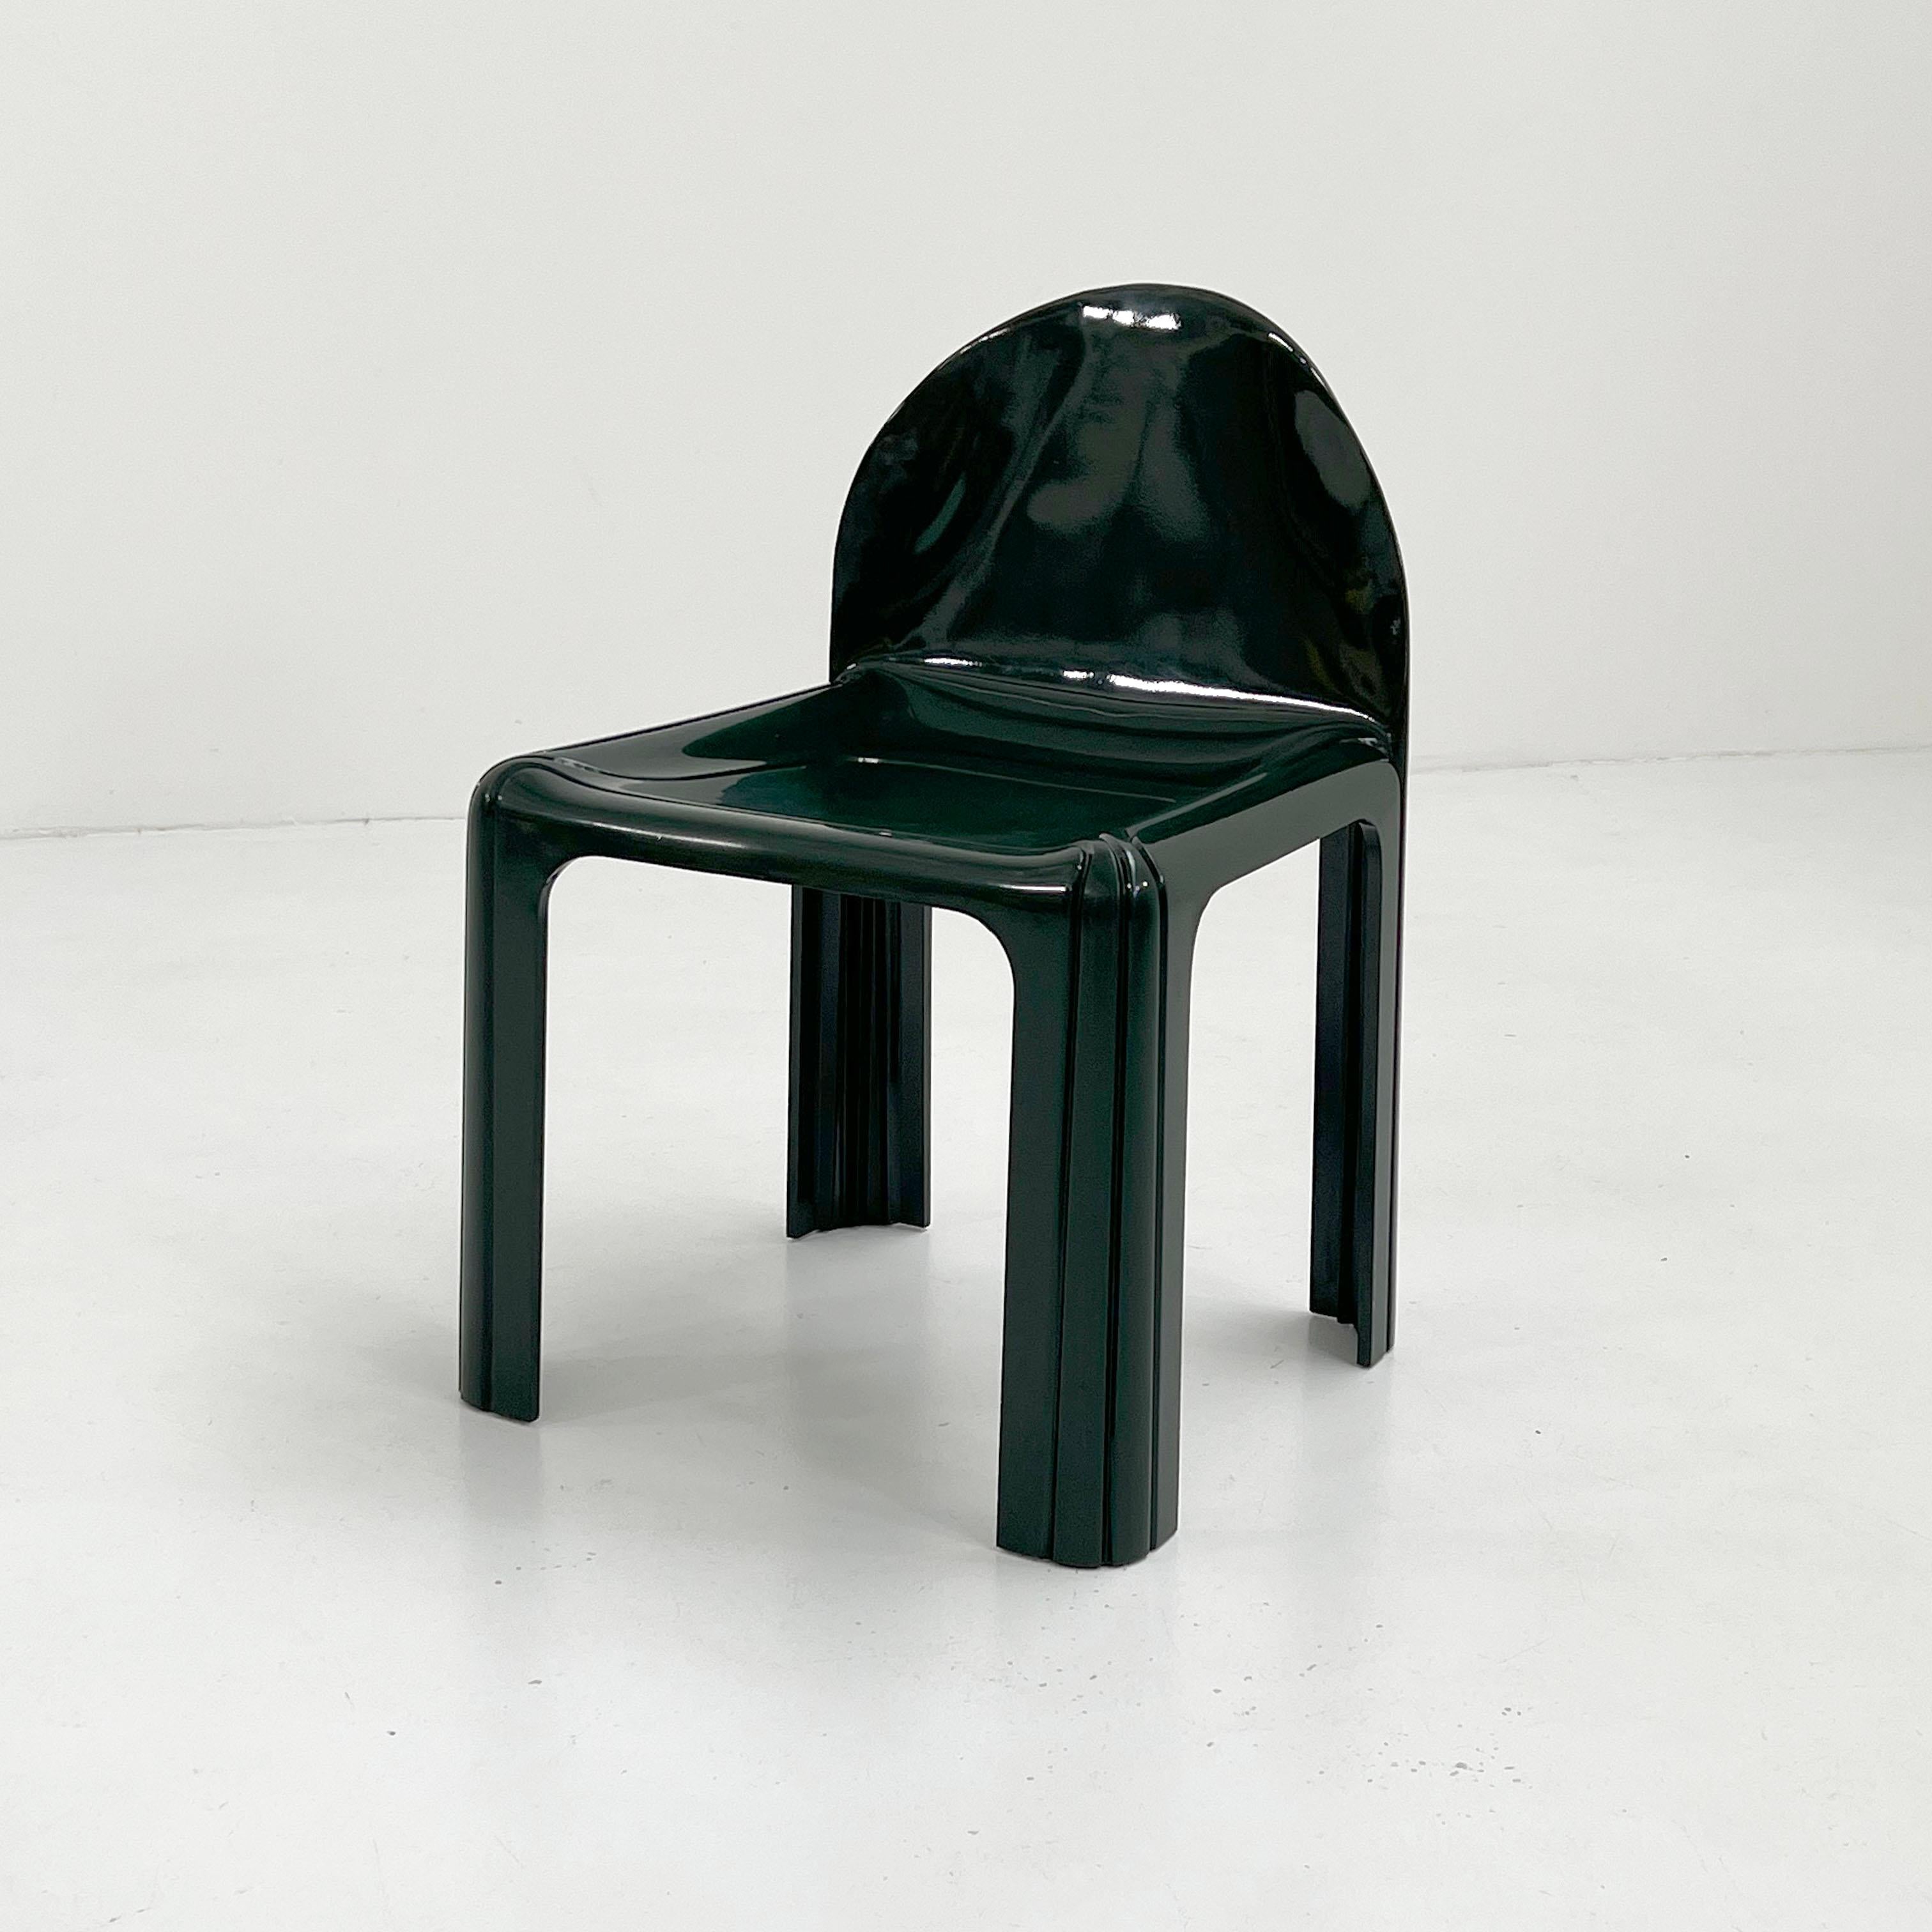 Designer - Gae Aulenti
Producer - Kartell
Model -  Model 4854 Dining Chair
Design Period - Seventies 
Measurements - Width 51 cm x Depth 47 cm x Height 75 cm x Seat Height 44 cm
Materials - Polyurethane
Color - Dark Green
Comments - Light wear